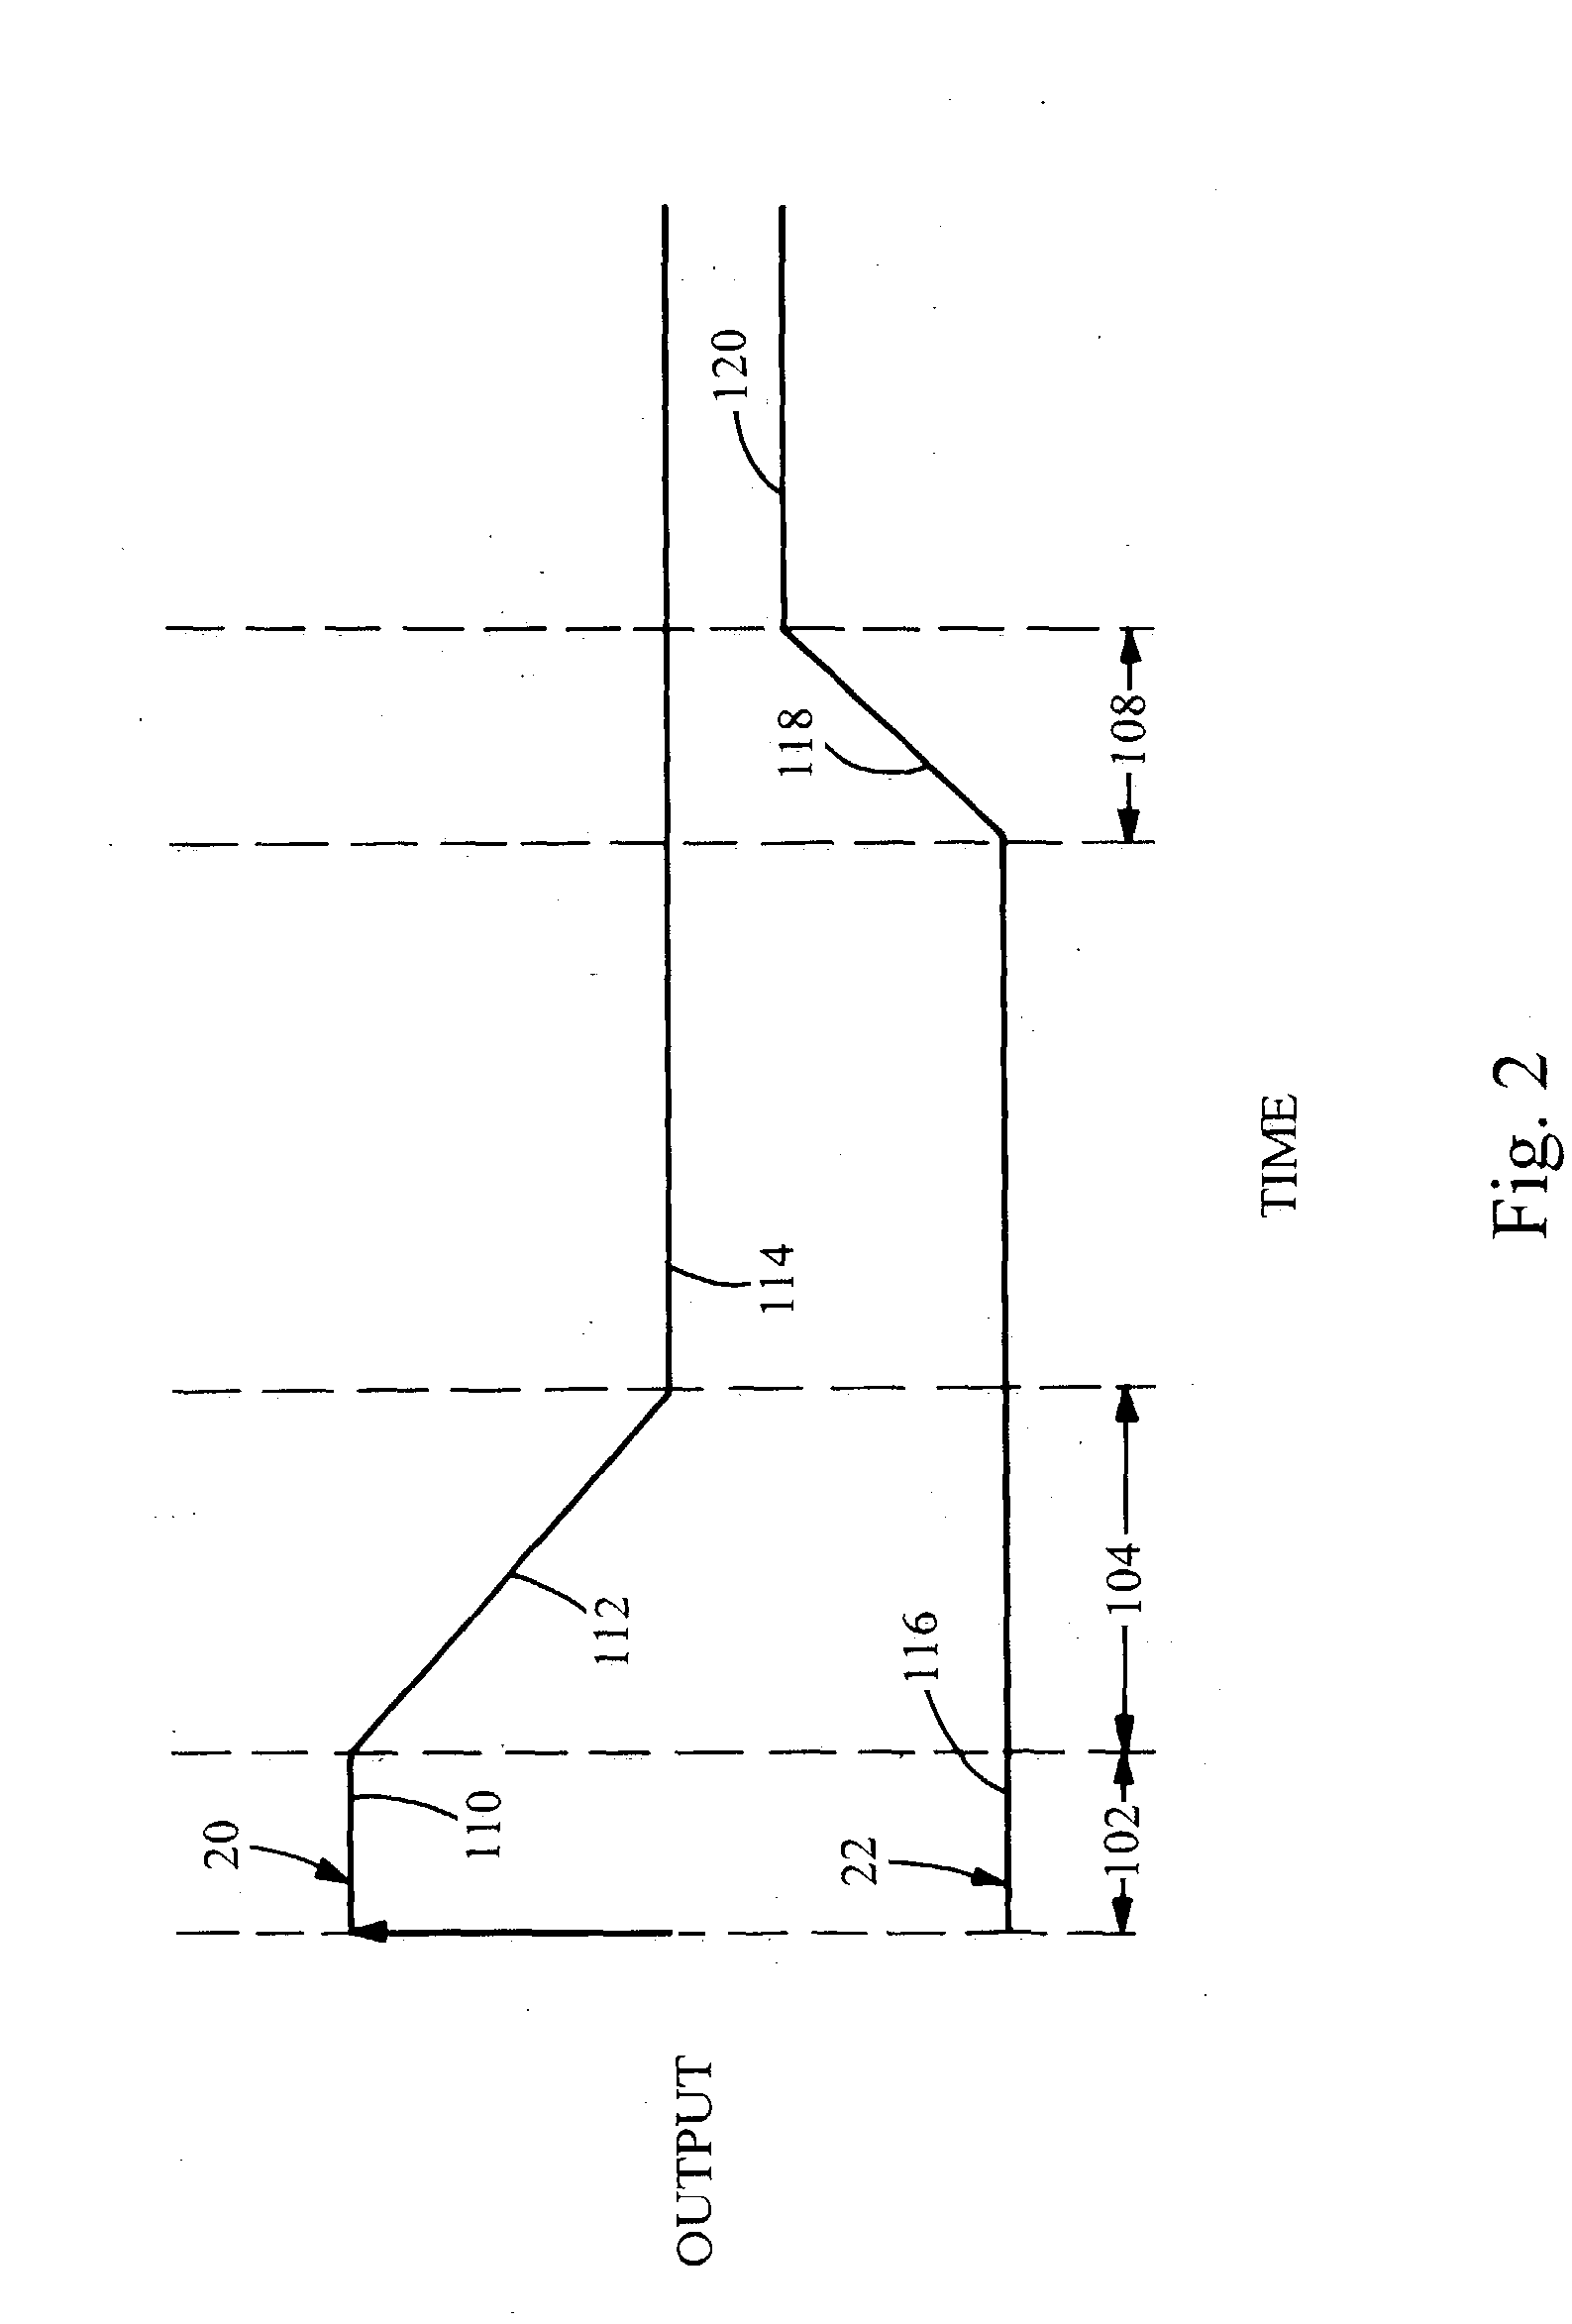 FM modulator output control during turn on